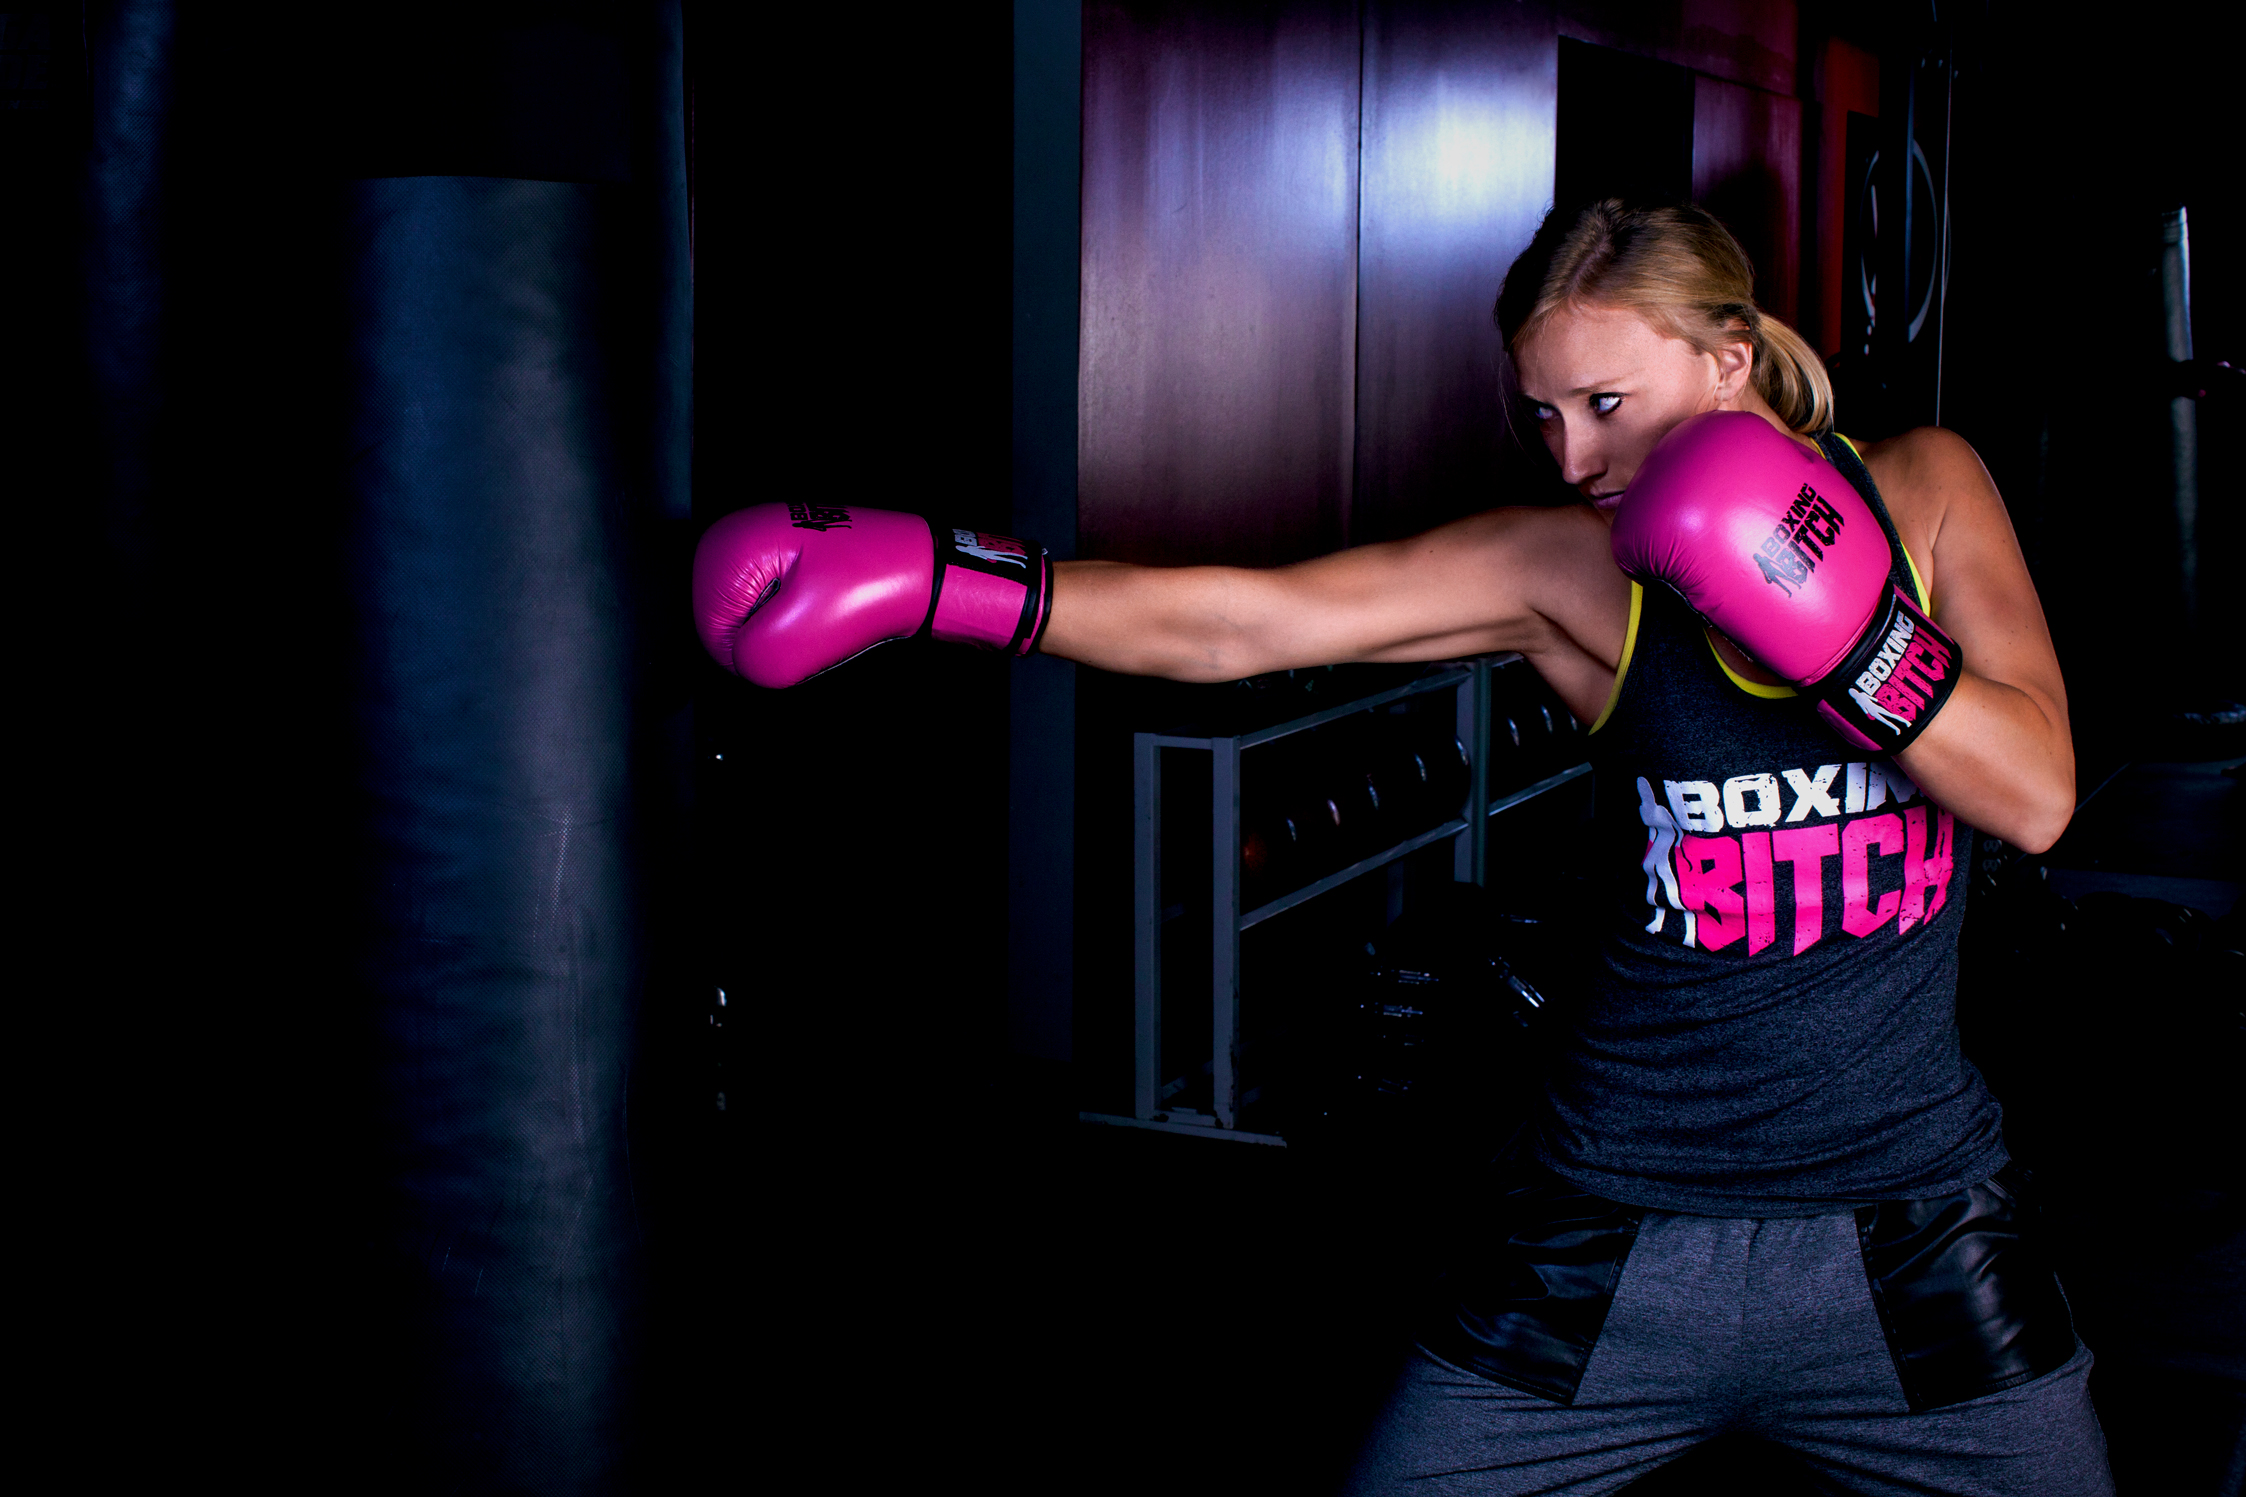 Katelyn Brooke representing Australia based Boxing Wear company 